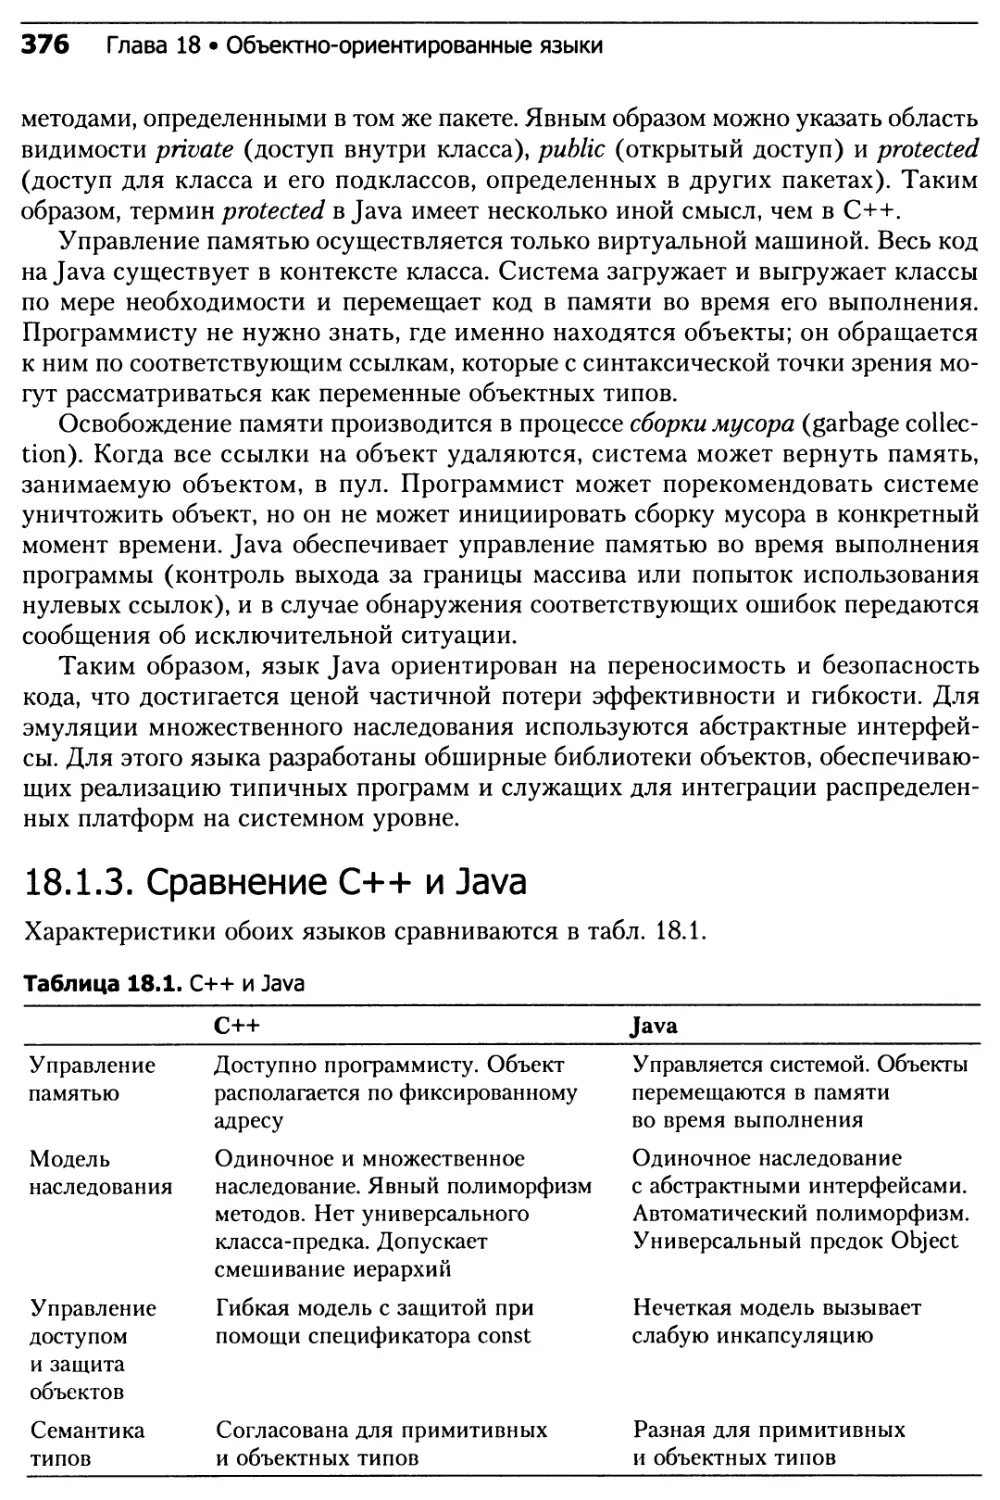 18.1.3. Сравнение C++ и Java